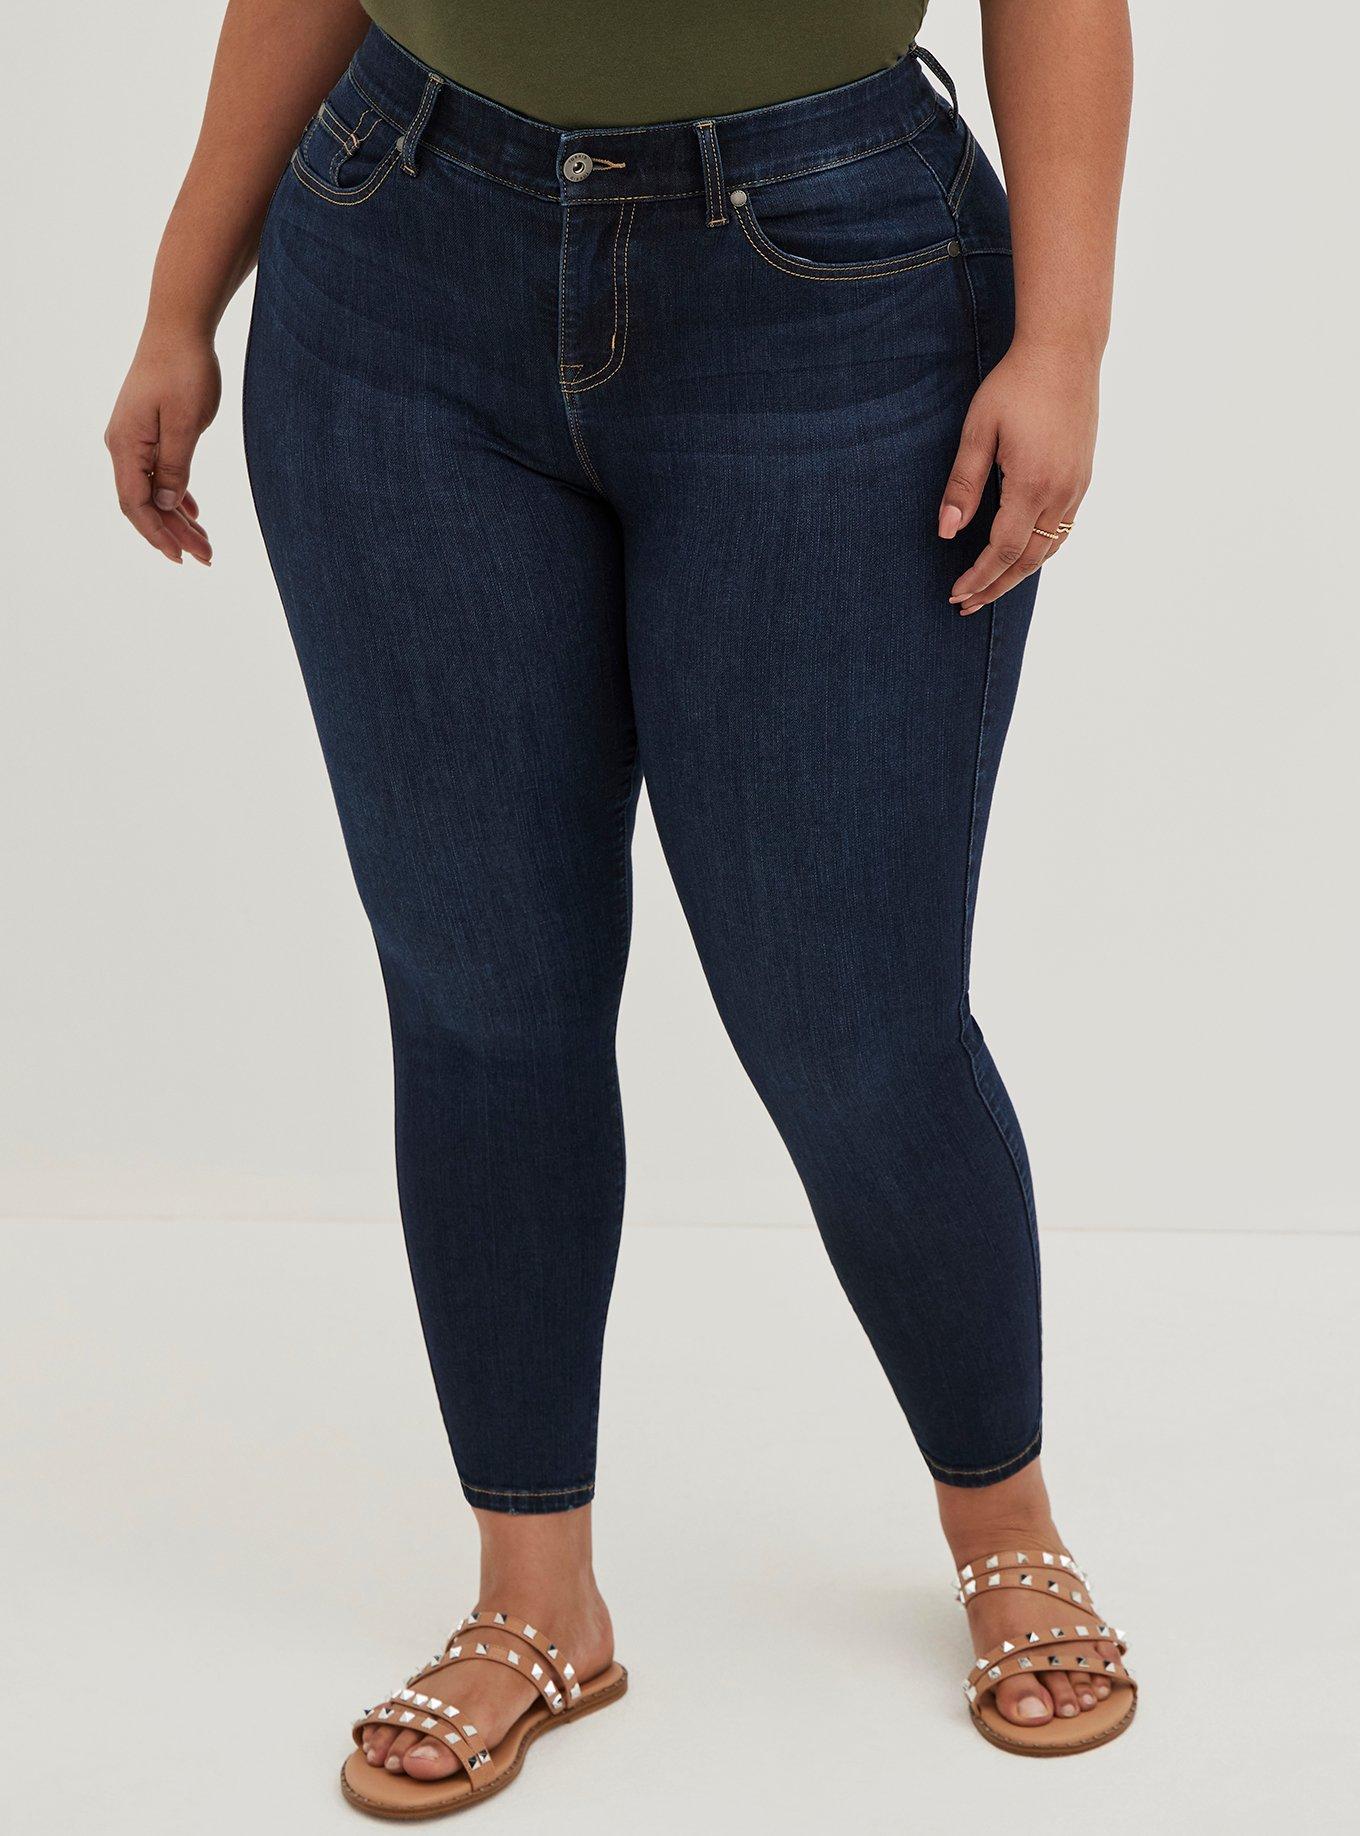 $44 Apt 9 Curvy Straight Tummy Control Slimming Mid Rise Jeans, 16